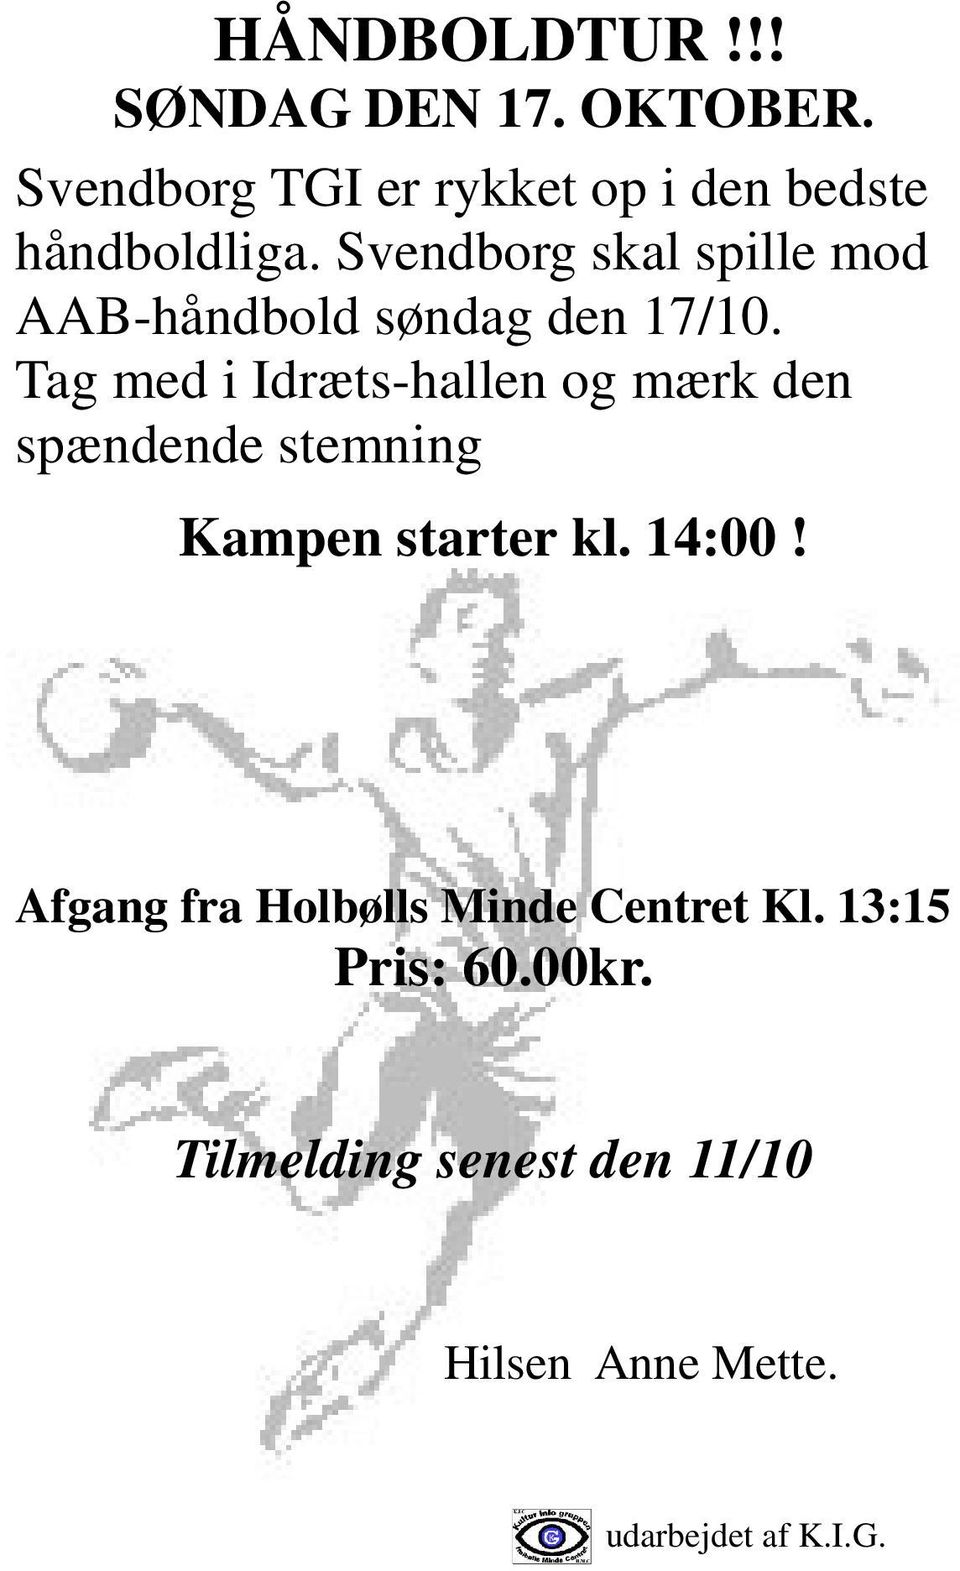 Svendborg skal spille mod AAB-håndbold søndag den 17/10.